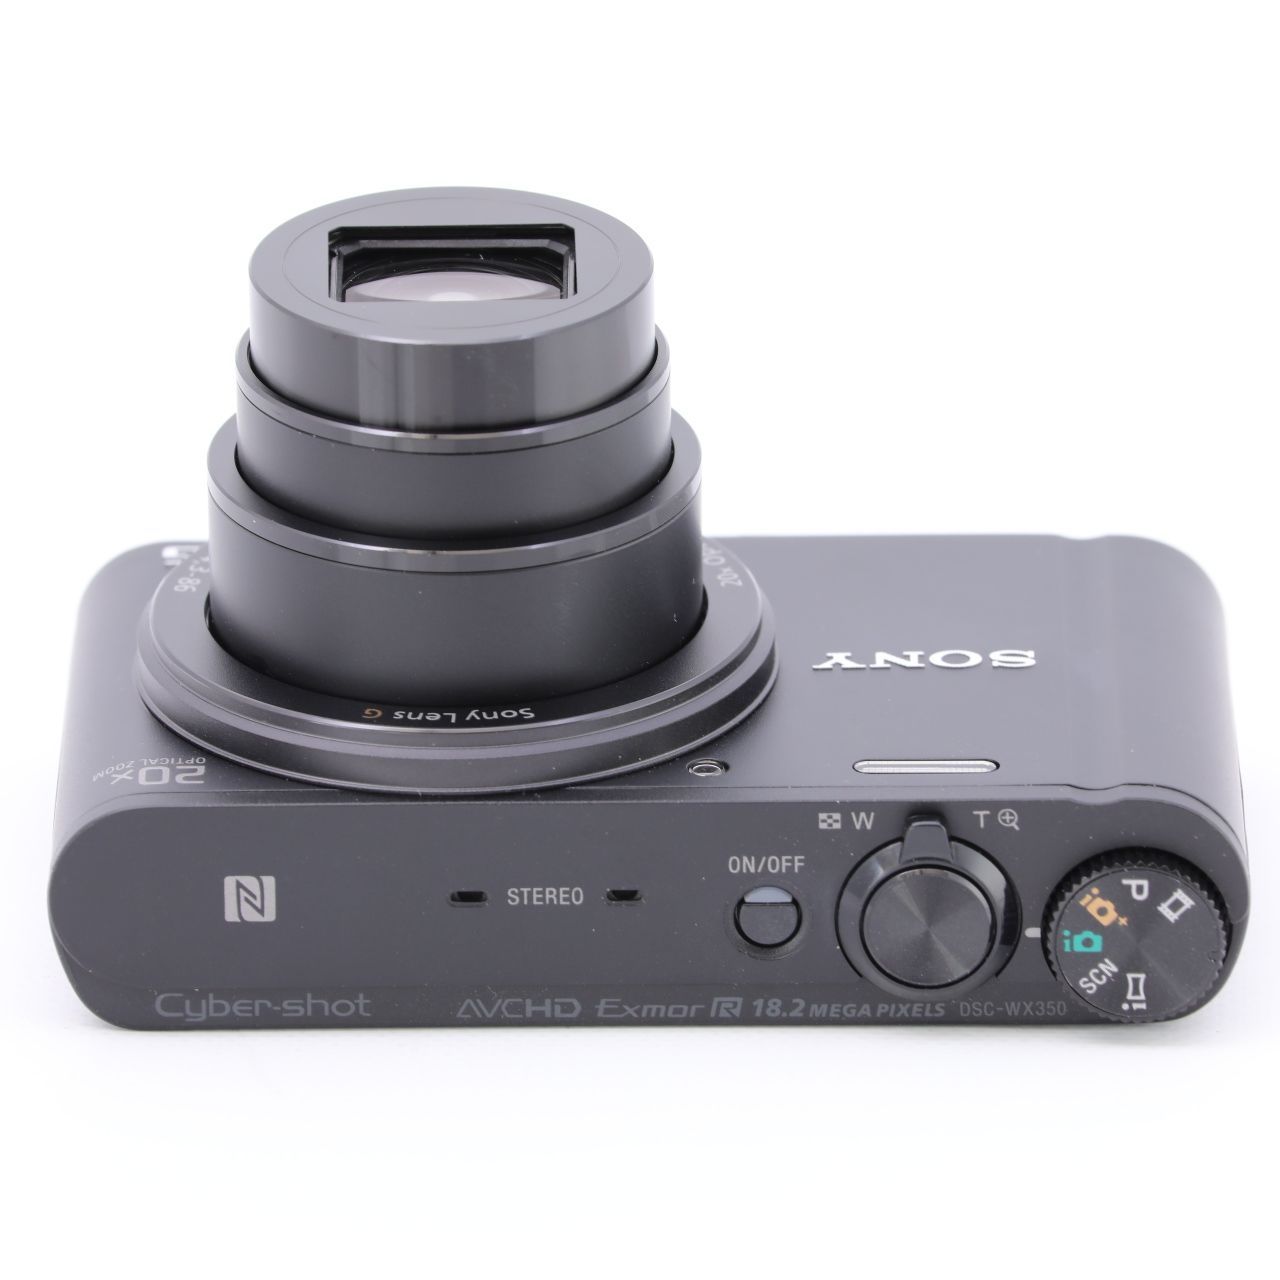 SONY ソニー デジタルカメラ Cyber-shot WX350 光学20倍 - メルカリ